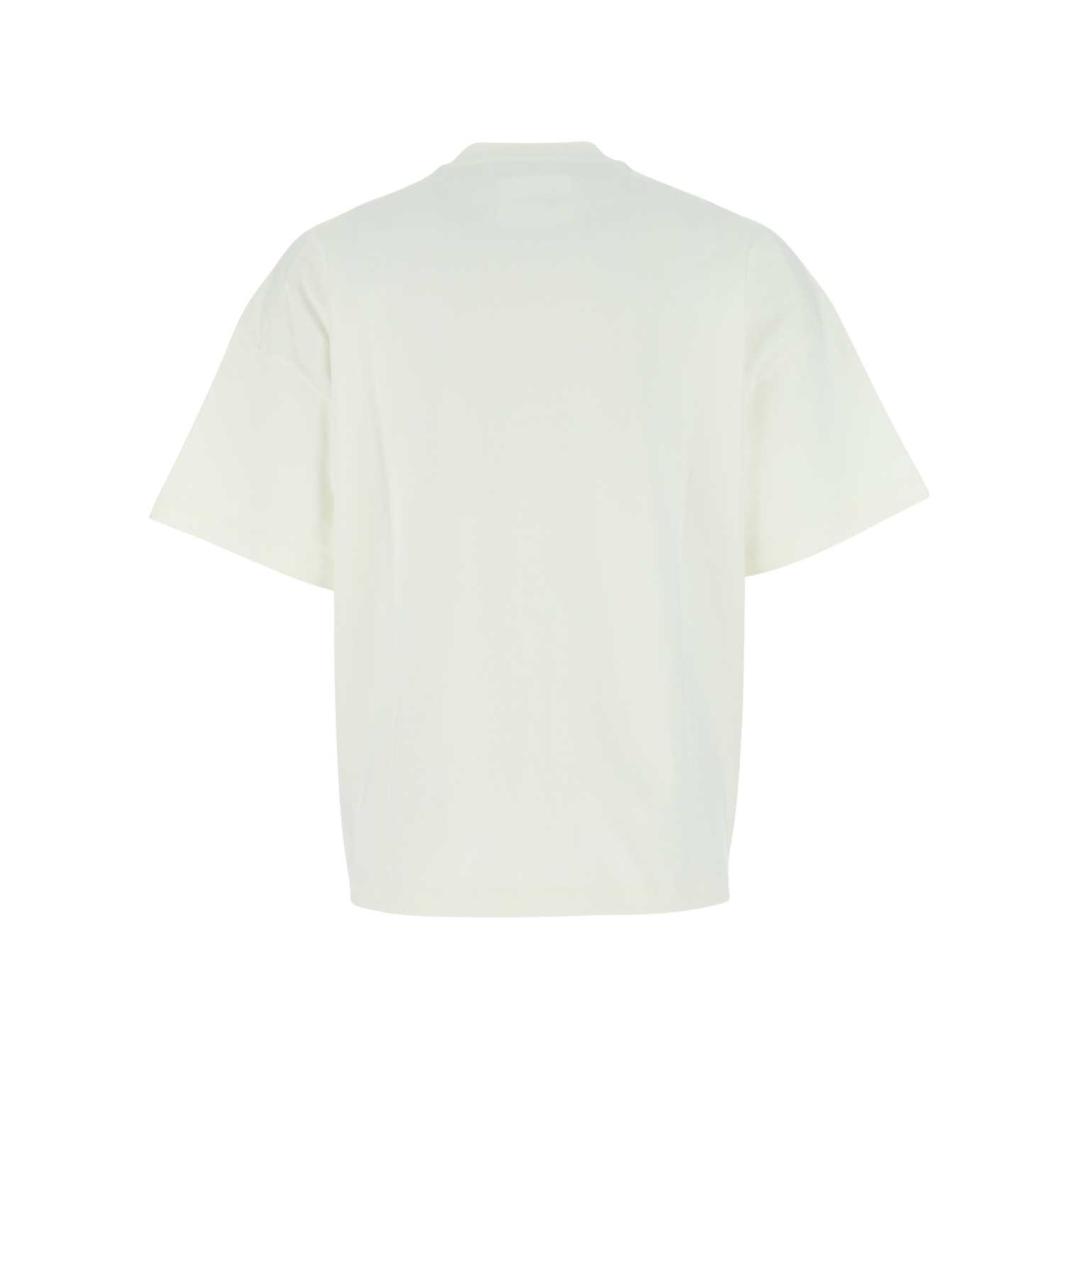 JIL SANDER Белая хлопковая футболка, фото 2